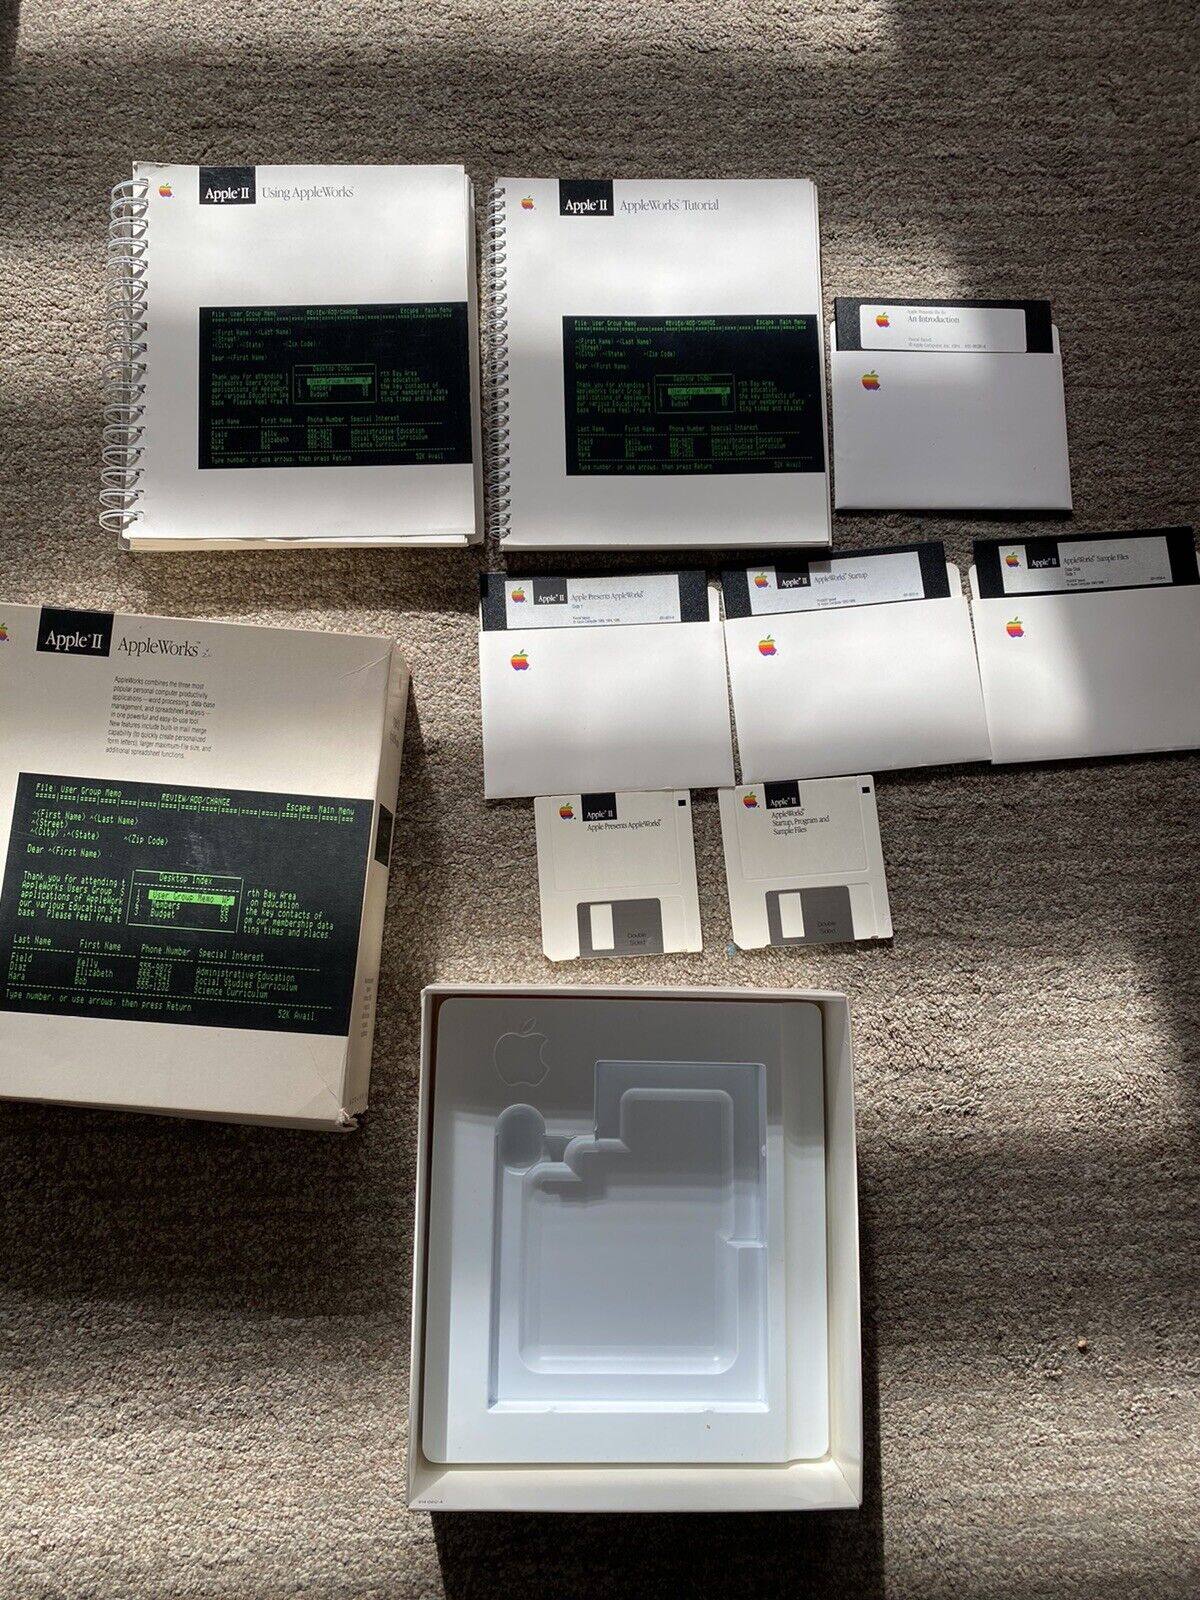 Vintage Apple II Appleworks Computer Software And Manuals W/Original Box